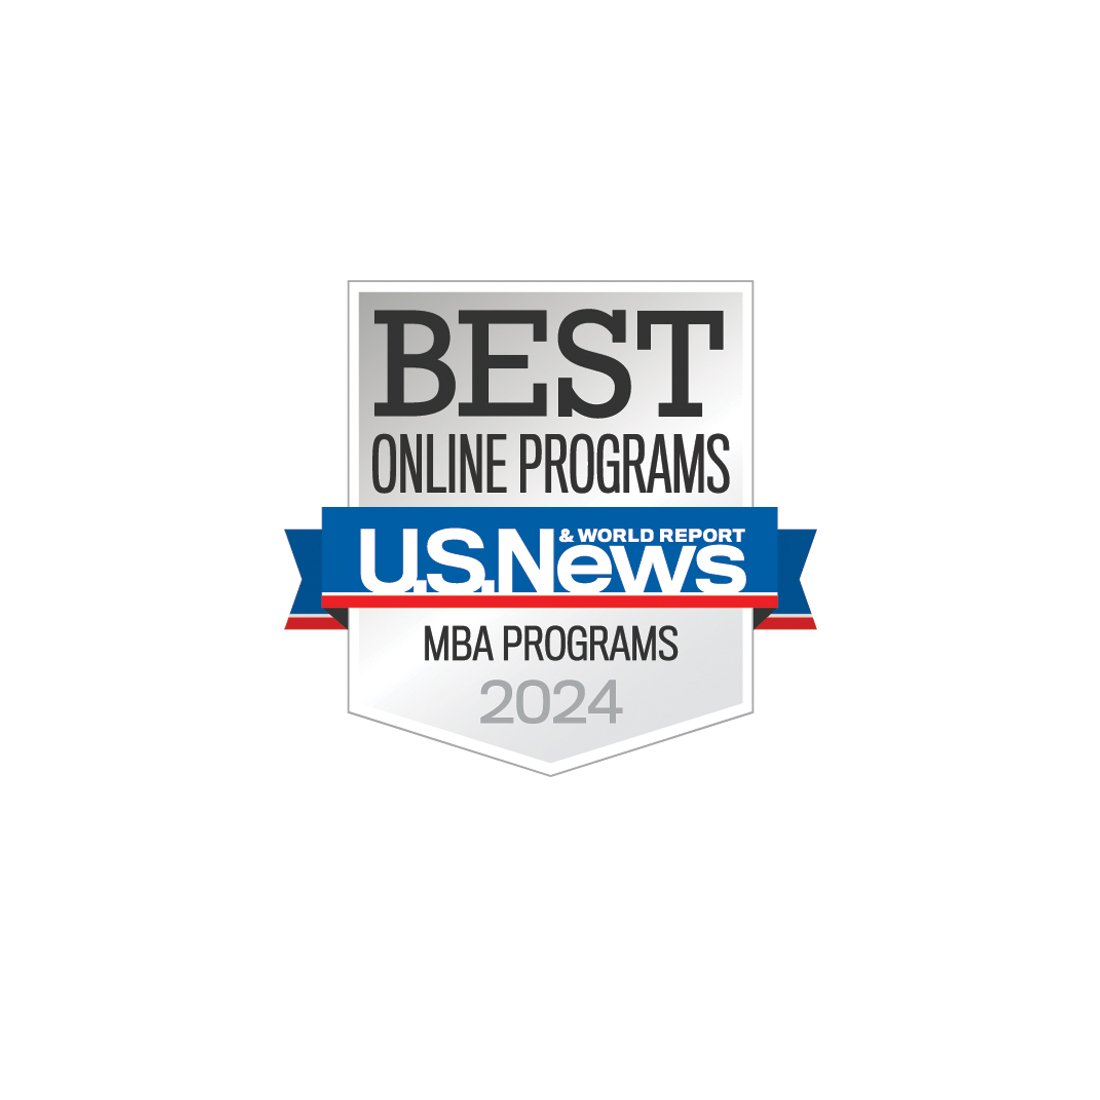 A Best Online Programs MBA Programs 2024 U.S. News & World Report badge.